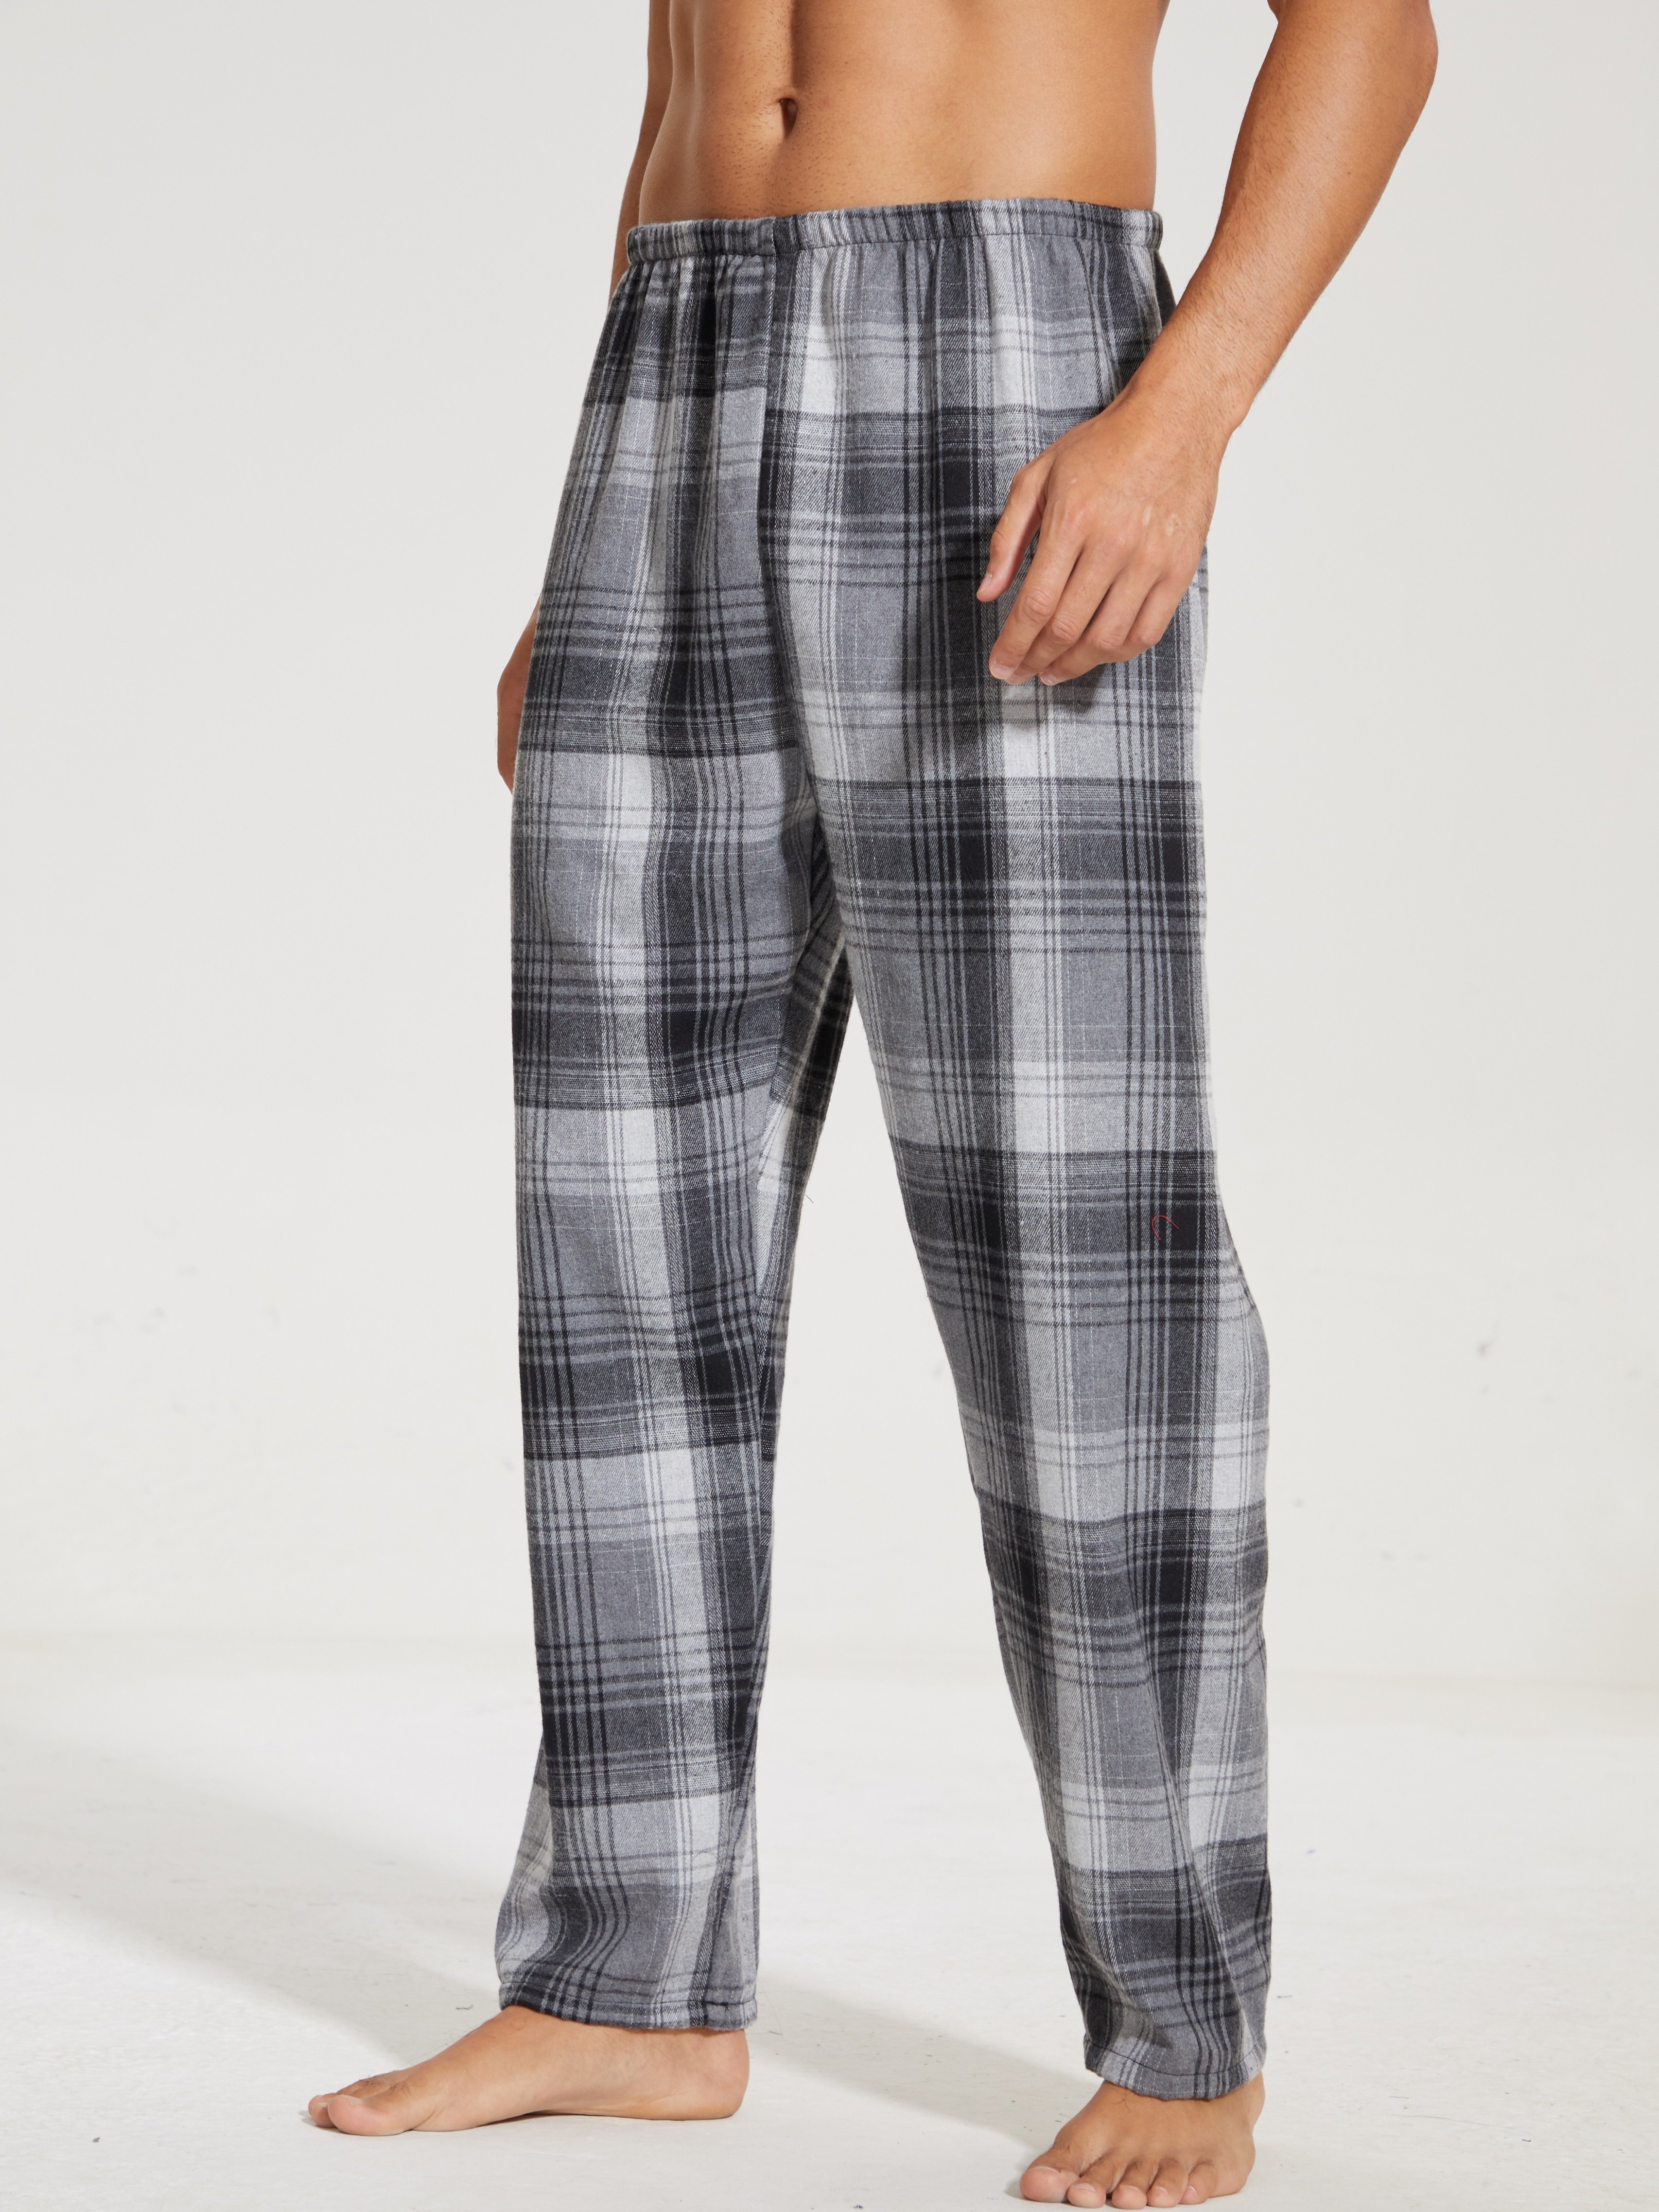 Just Love Women's Plush Pajama Pants - Soft and Cozy Lounge Pants (Grey -  Plaid, Large)